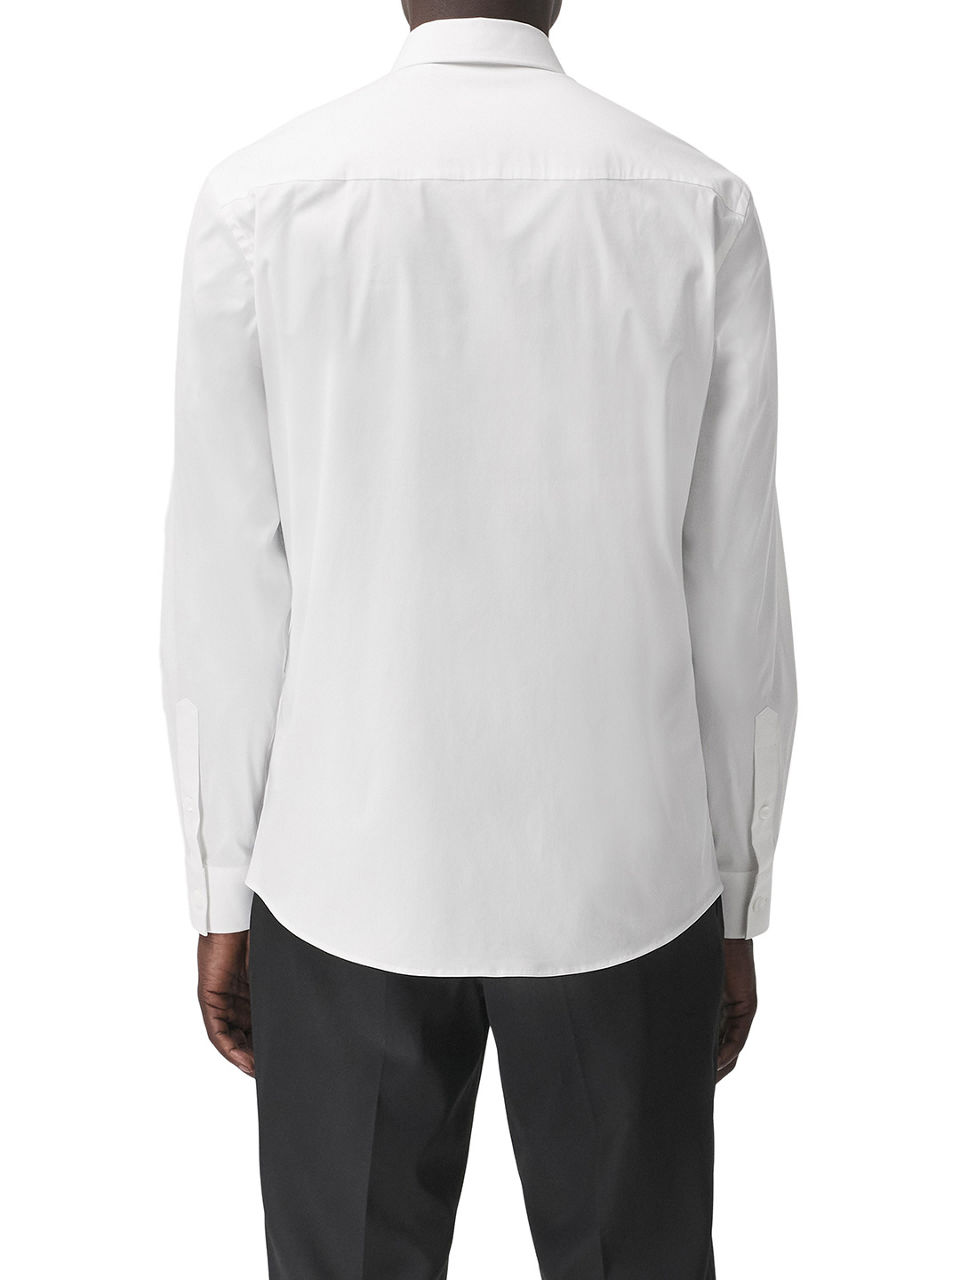 Monogram Motif Technical Cotton Shirt in Navy - Men